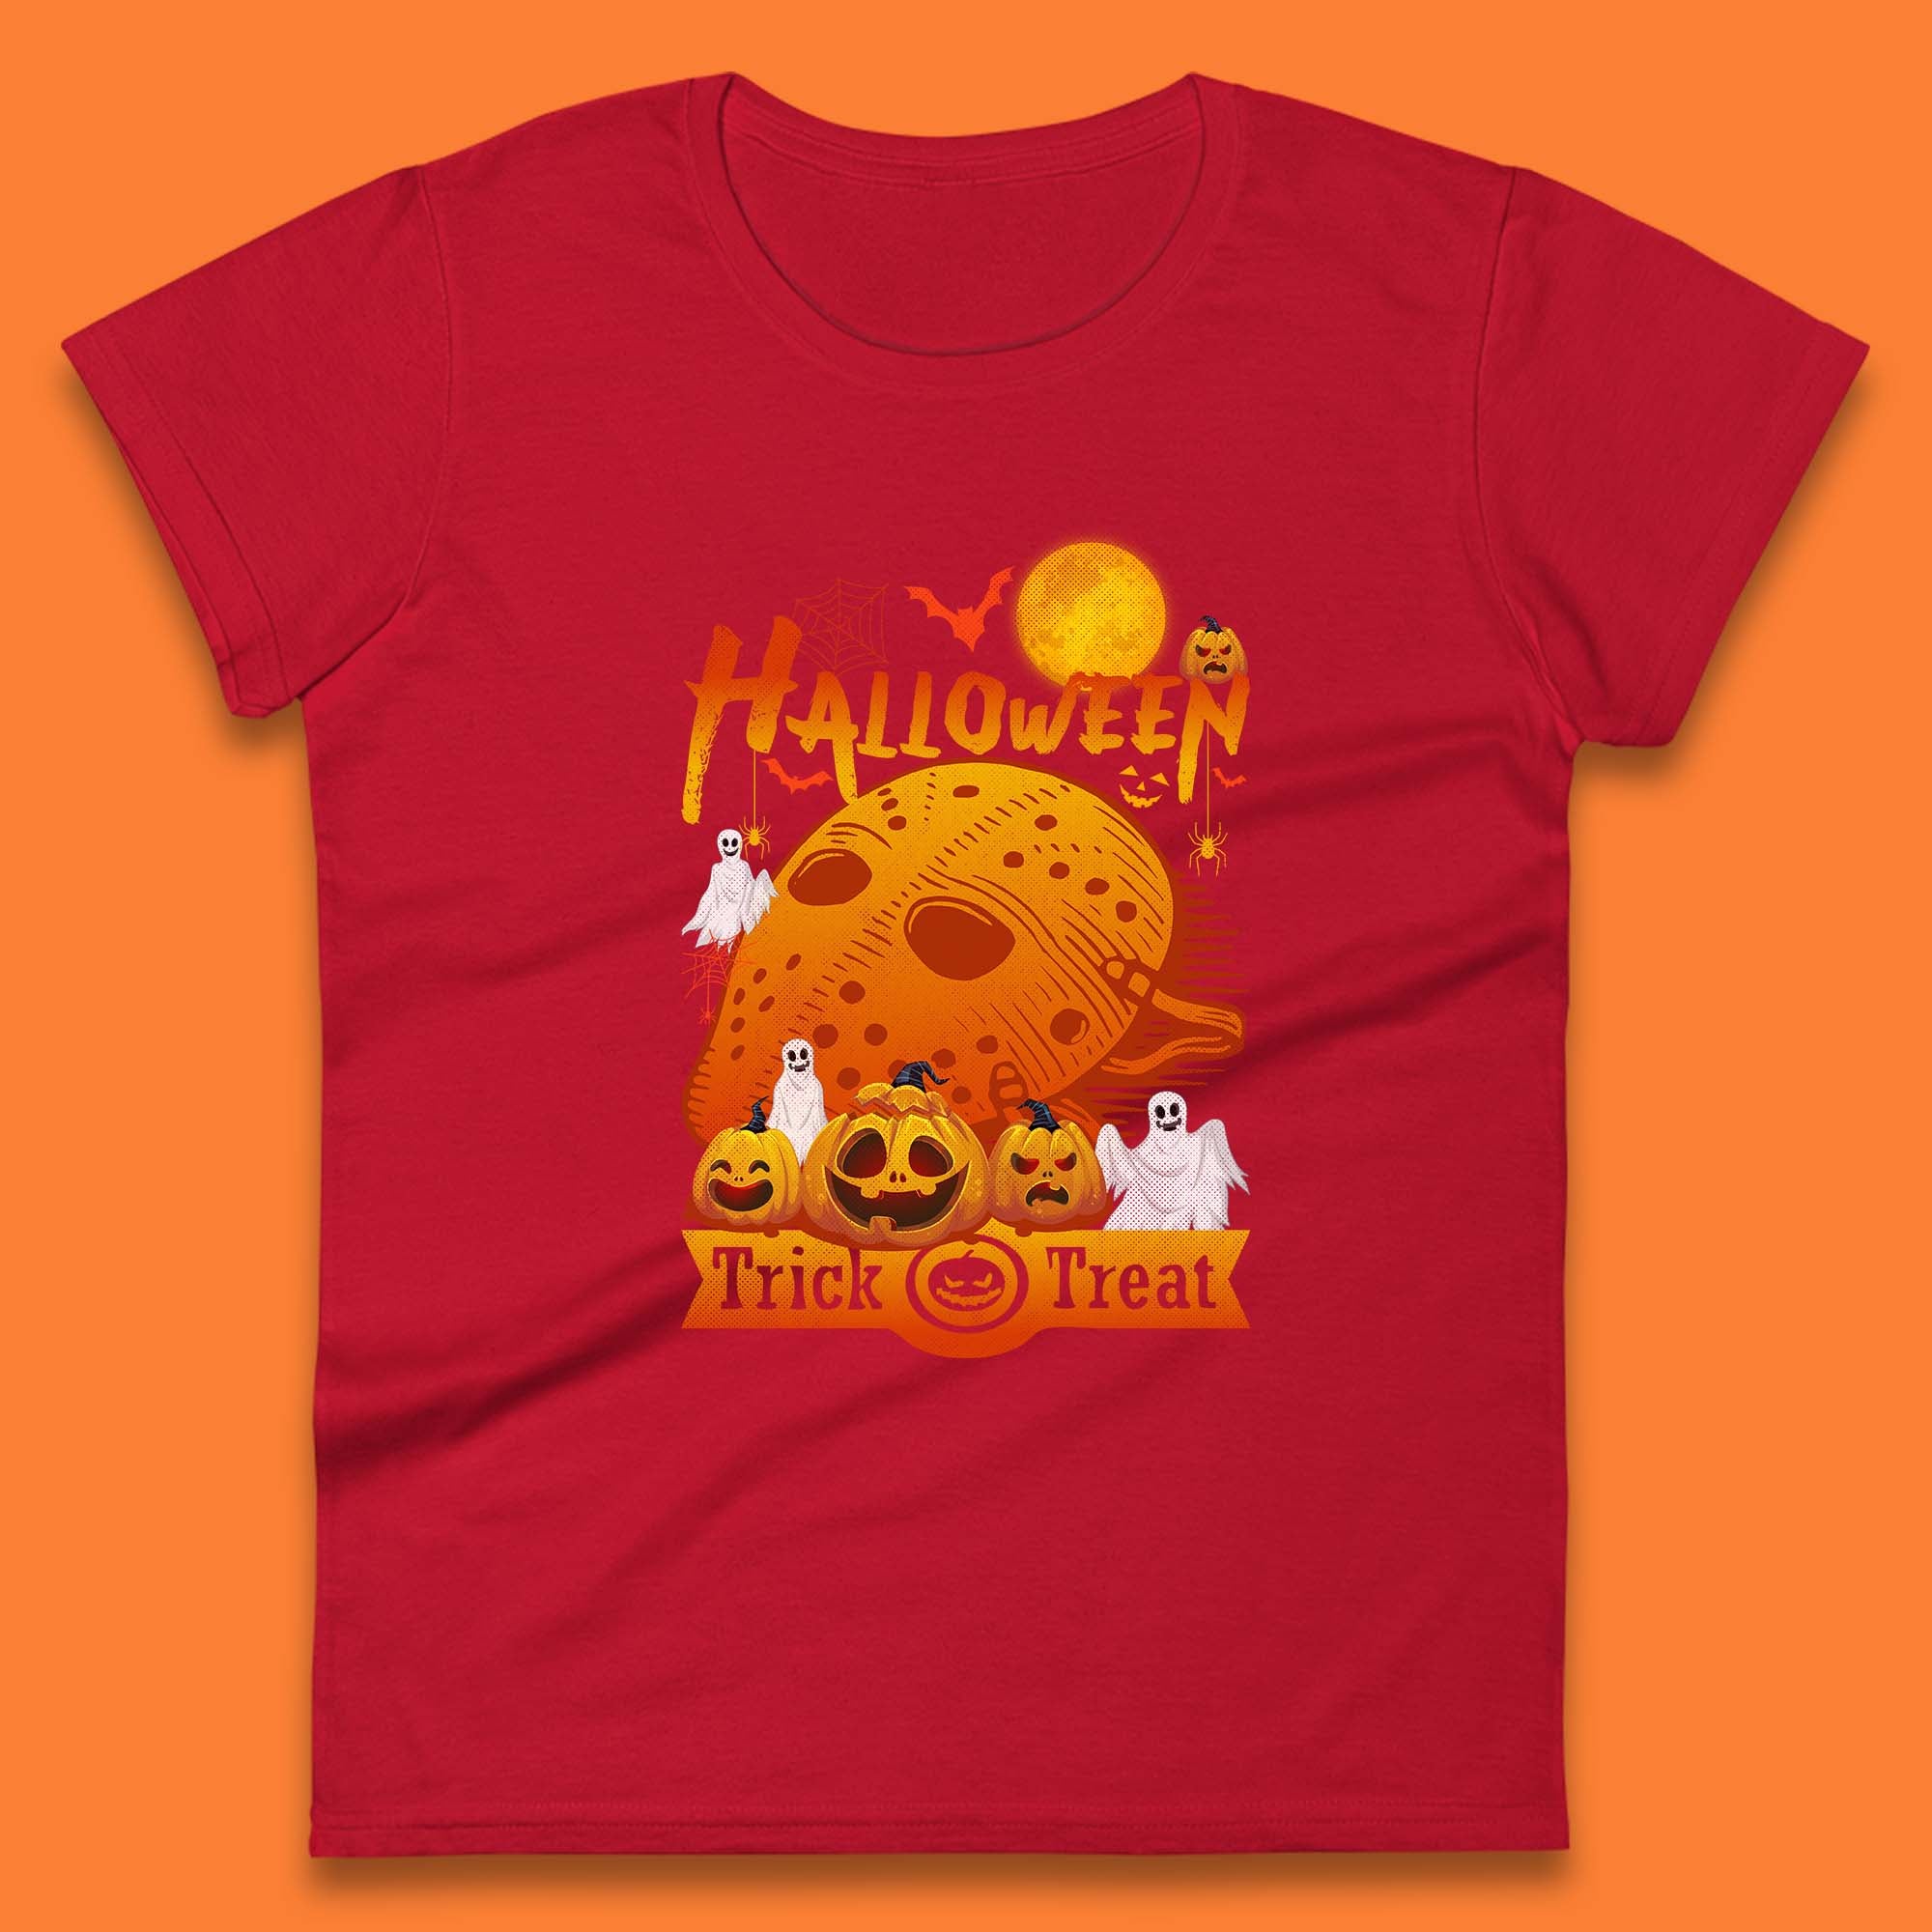 Happy Halloween Jason Voorhees Face Mask Halloween Friday The 13th Horror Movie Halloween Pumpkins Womens Tee Top